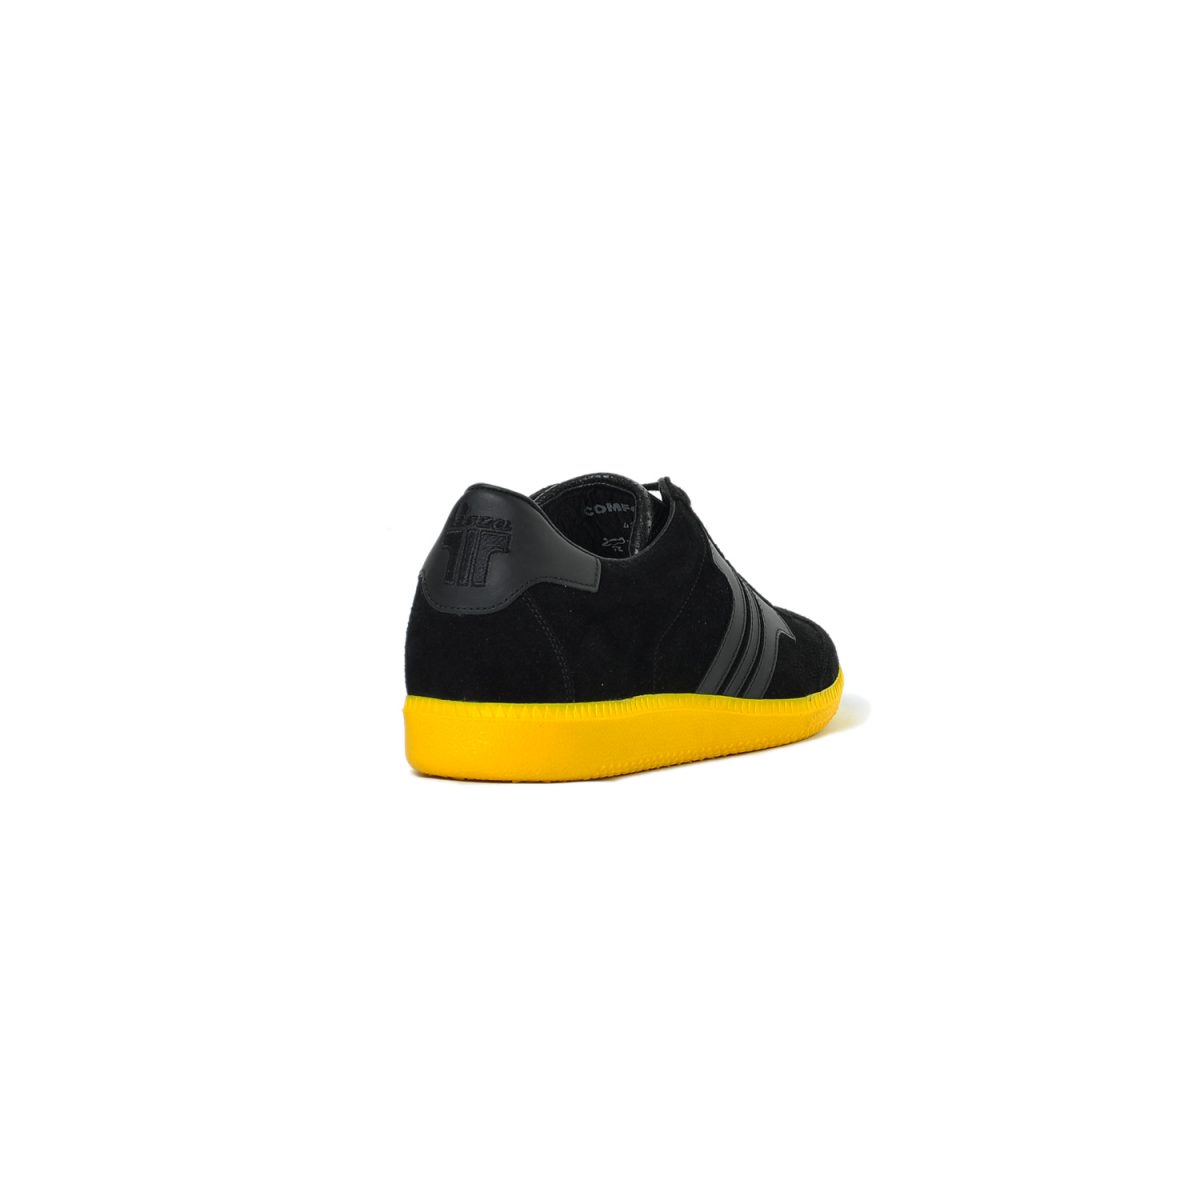 Tisza shoes - Comfort - Black-yellow